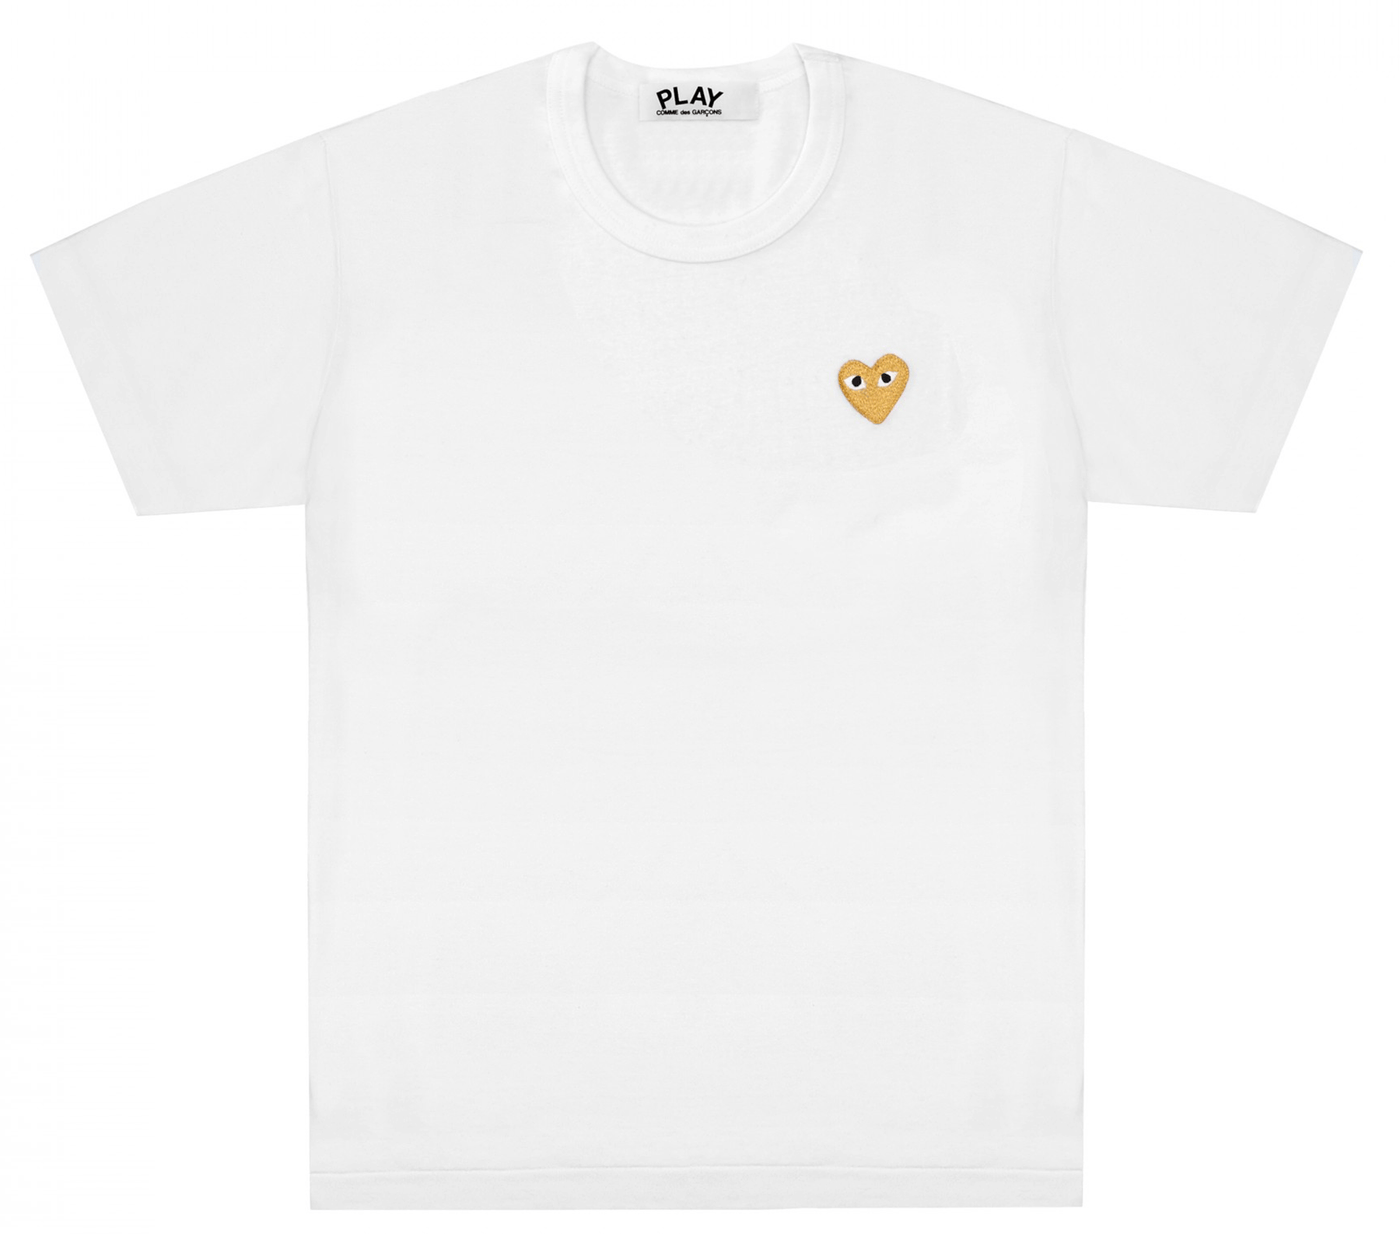 Comme-des-Garcons-Play-T-Shirt-With-Gold-Emblem-Women-White-1